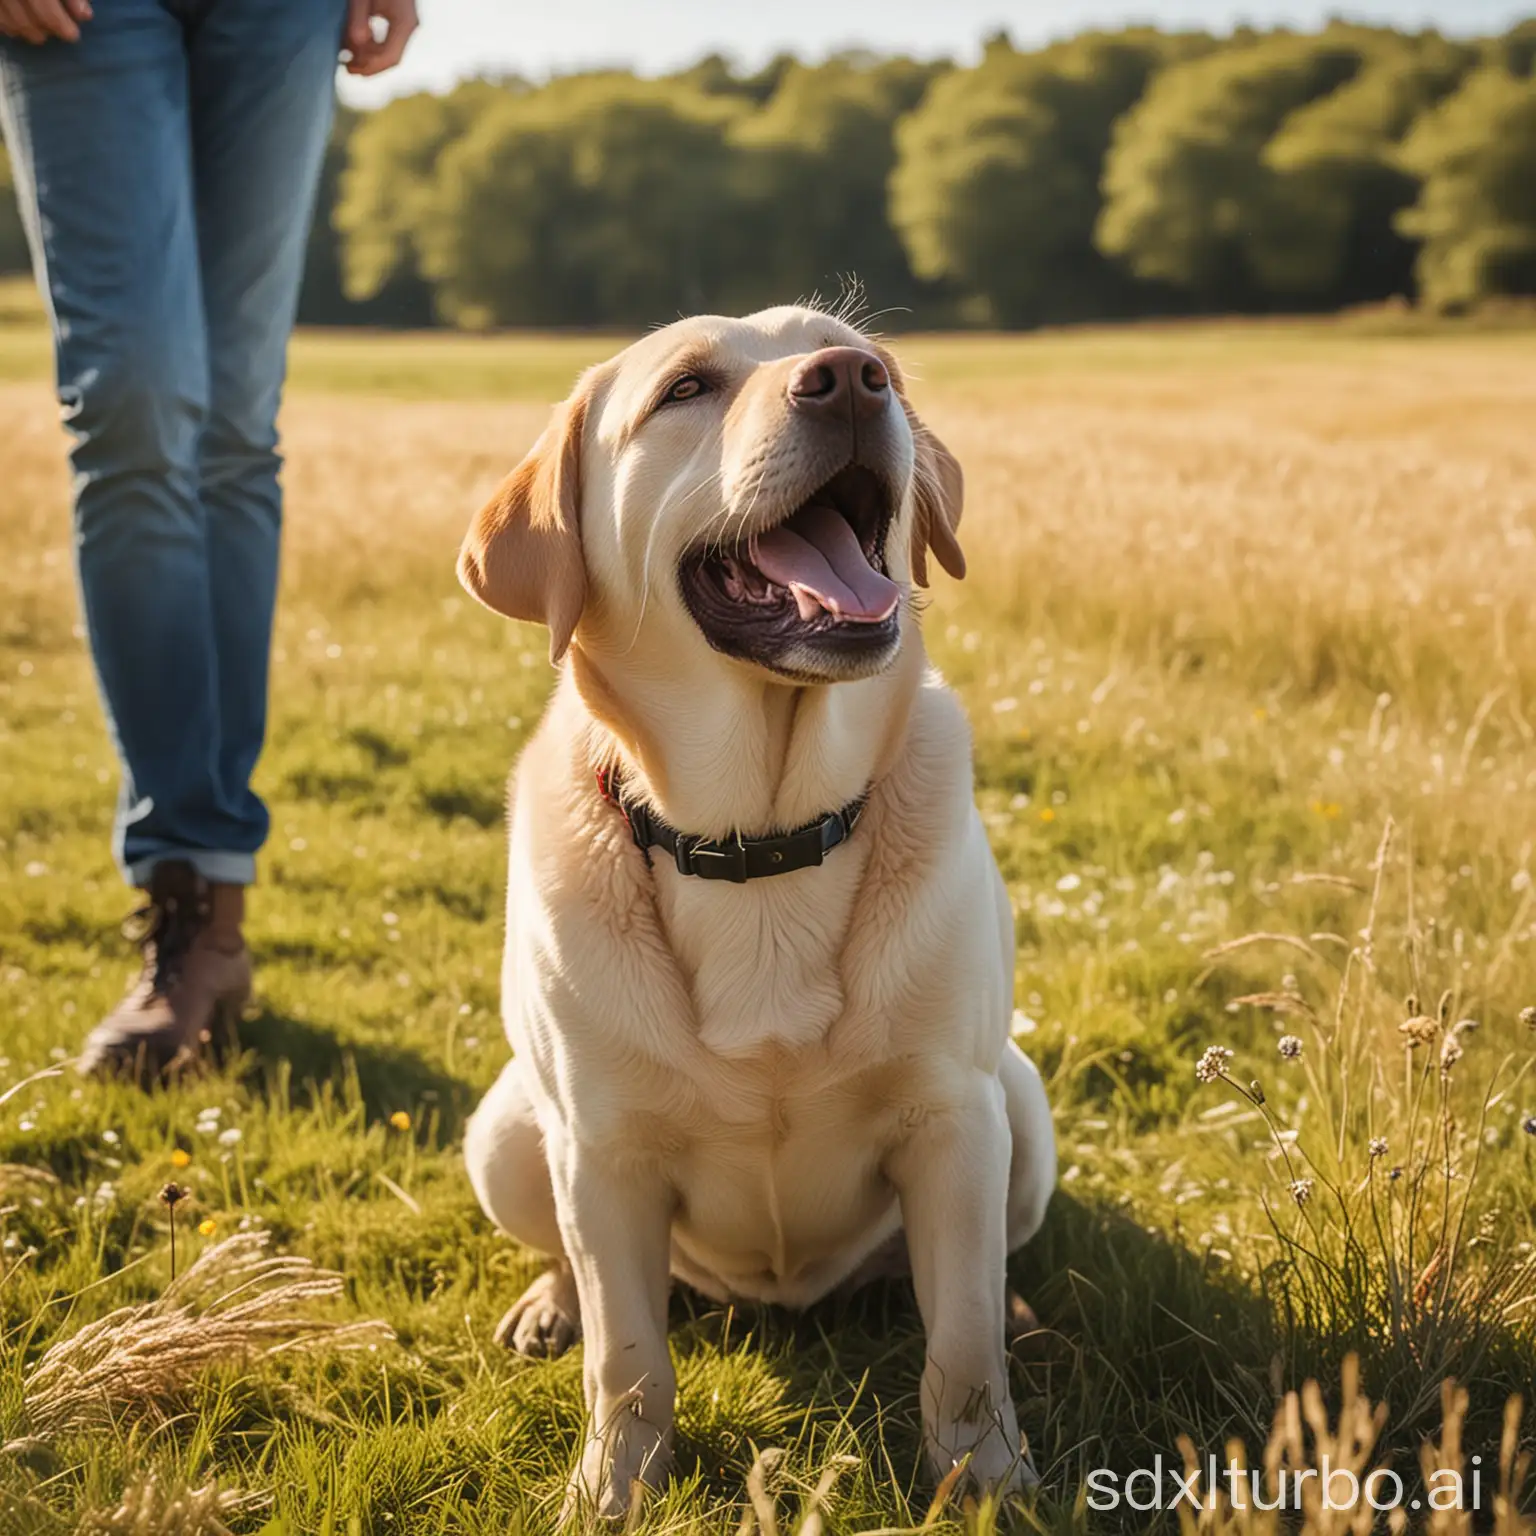 Joyful-Labrador-Retrievers-Enjoying-Sunshine-with-Their-Owners